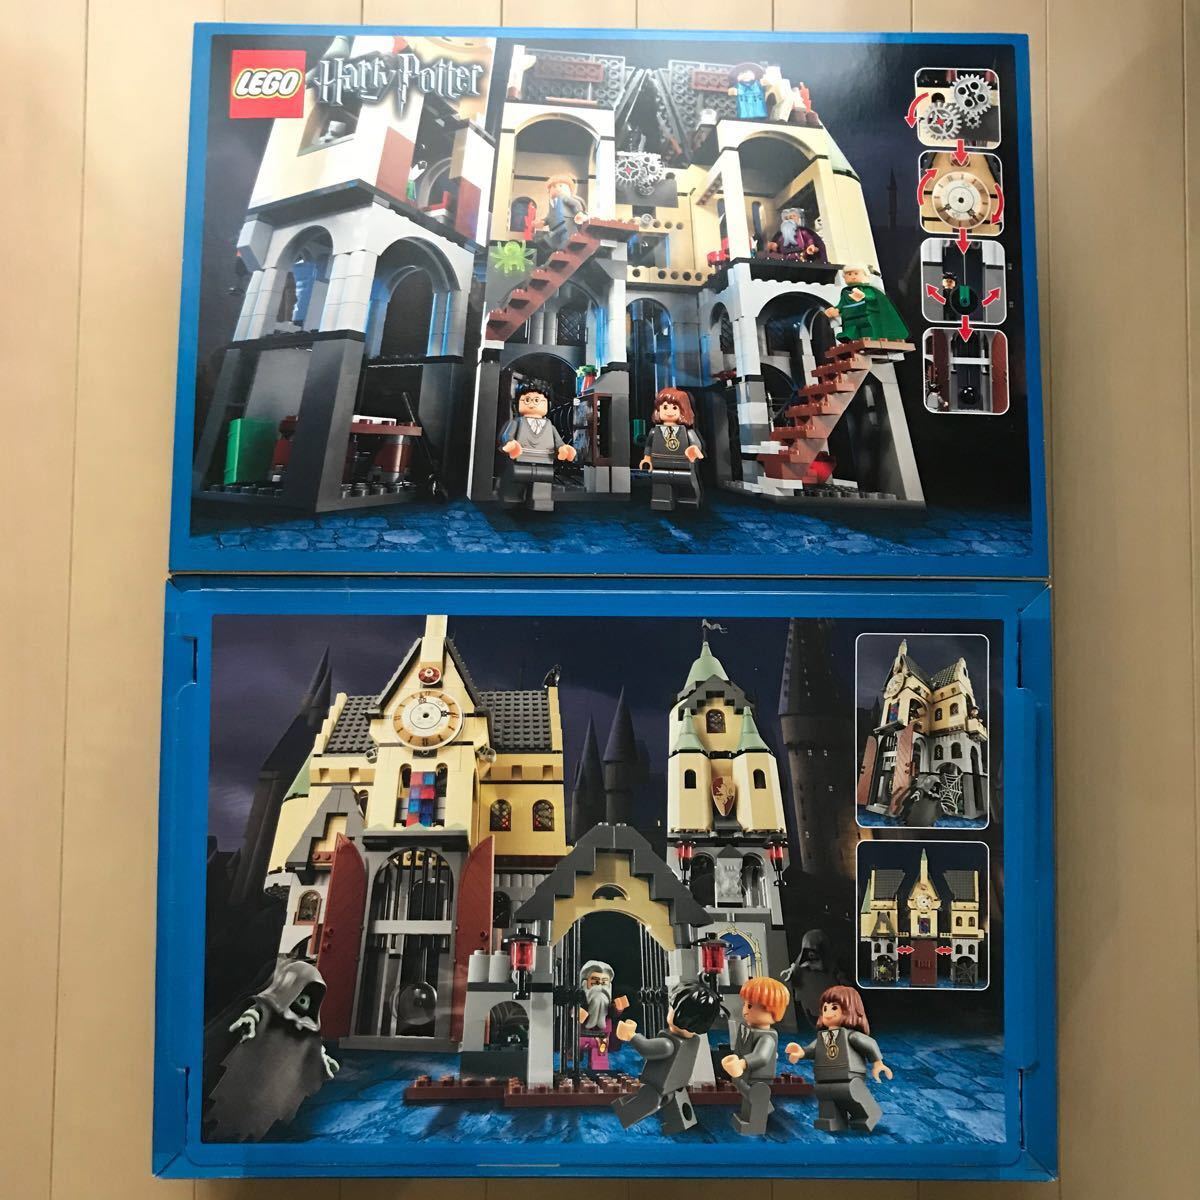 LEGO ハリーポッター 4757 ホグワーツ城